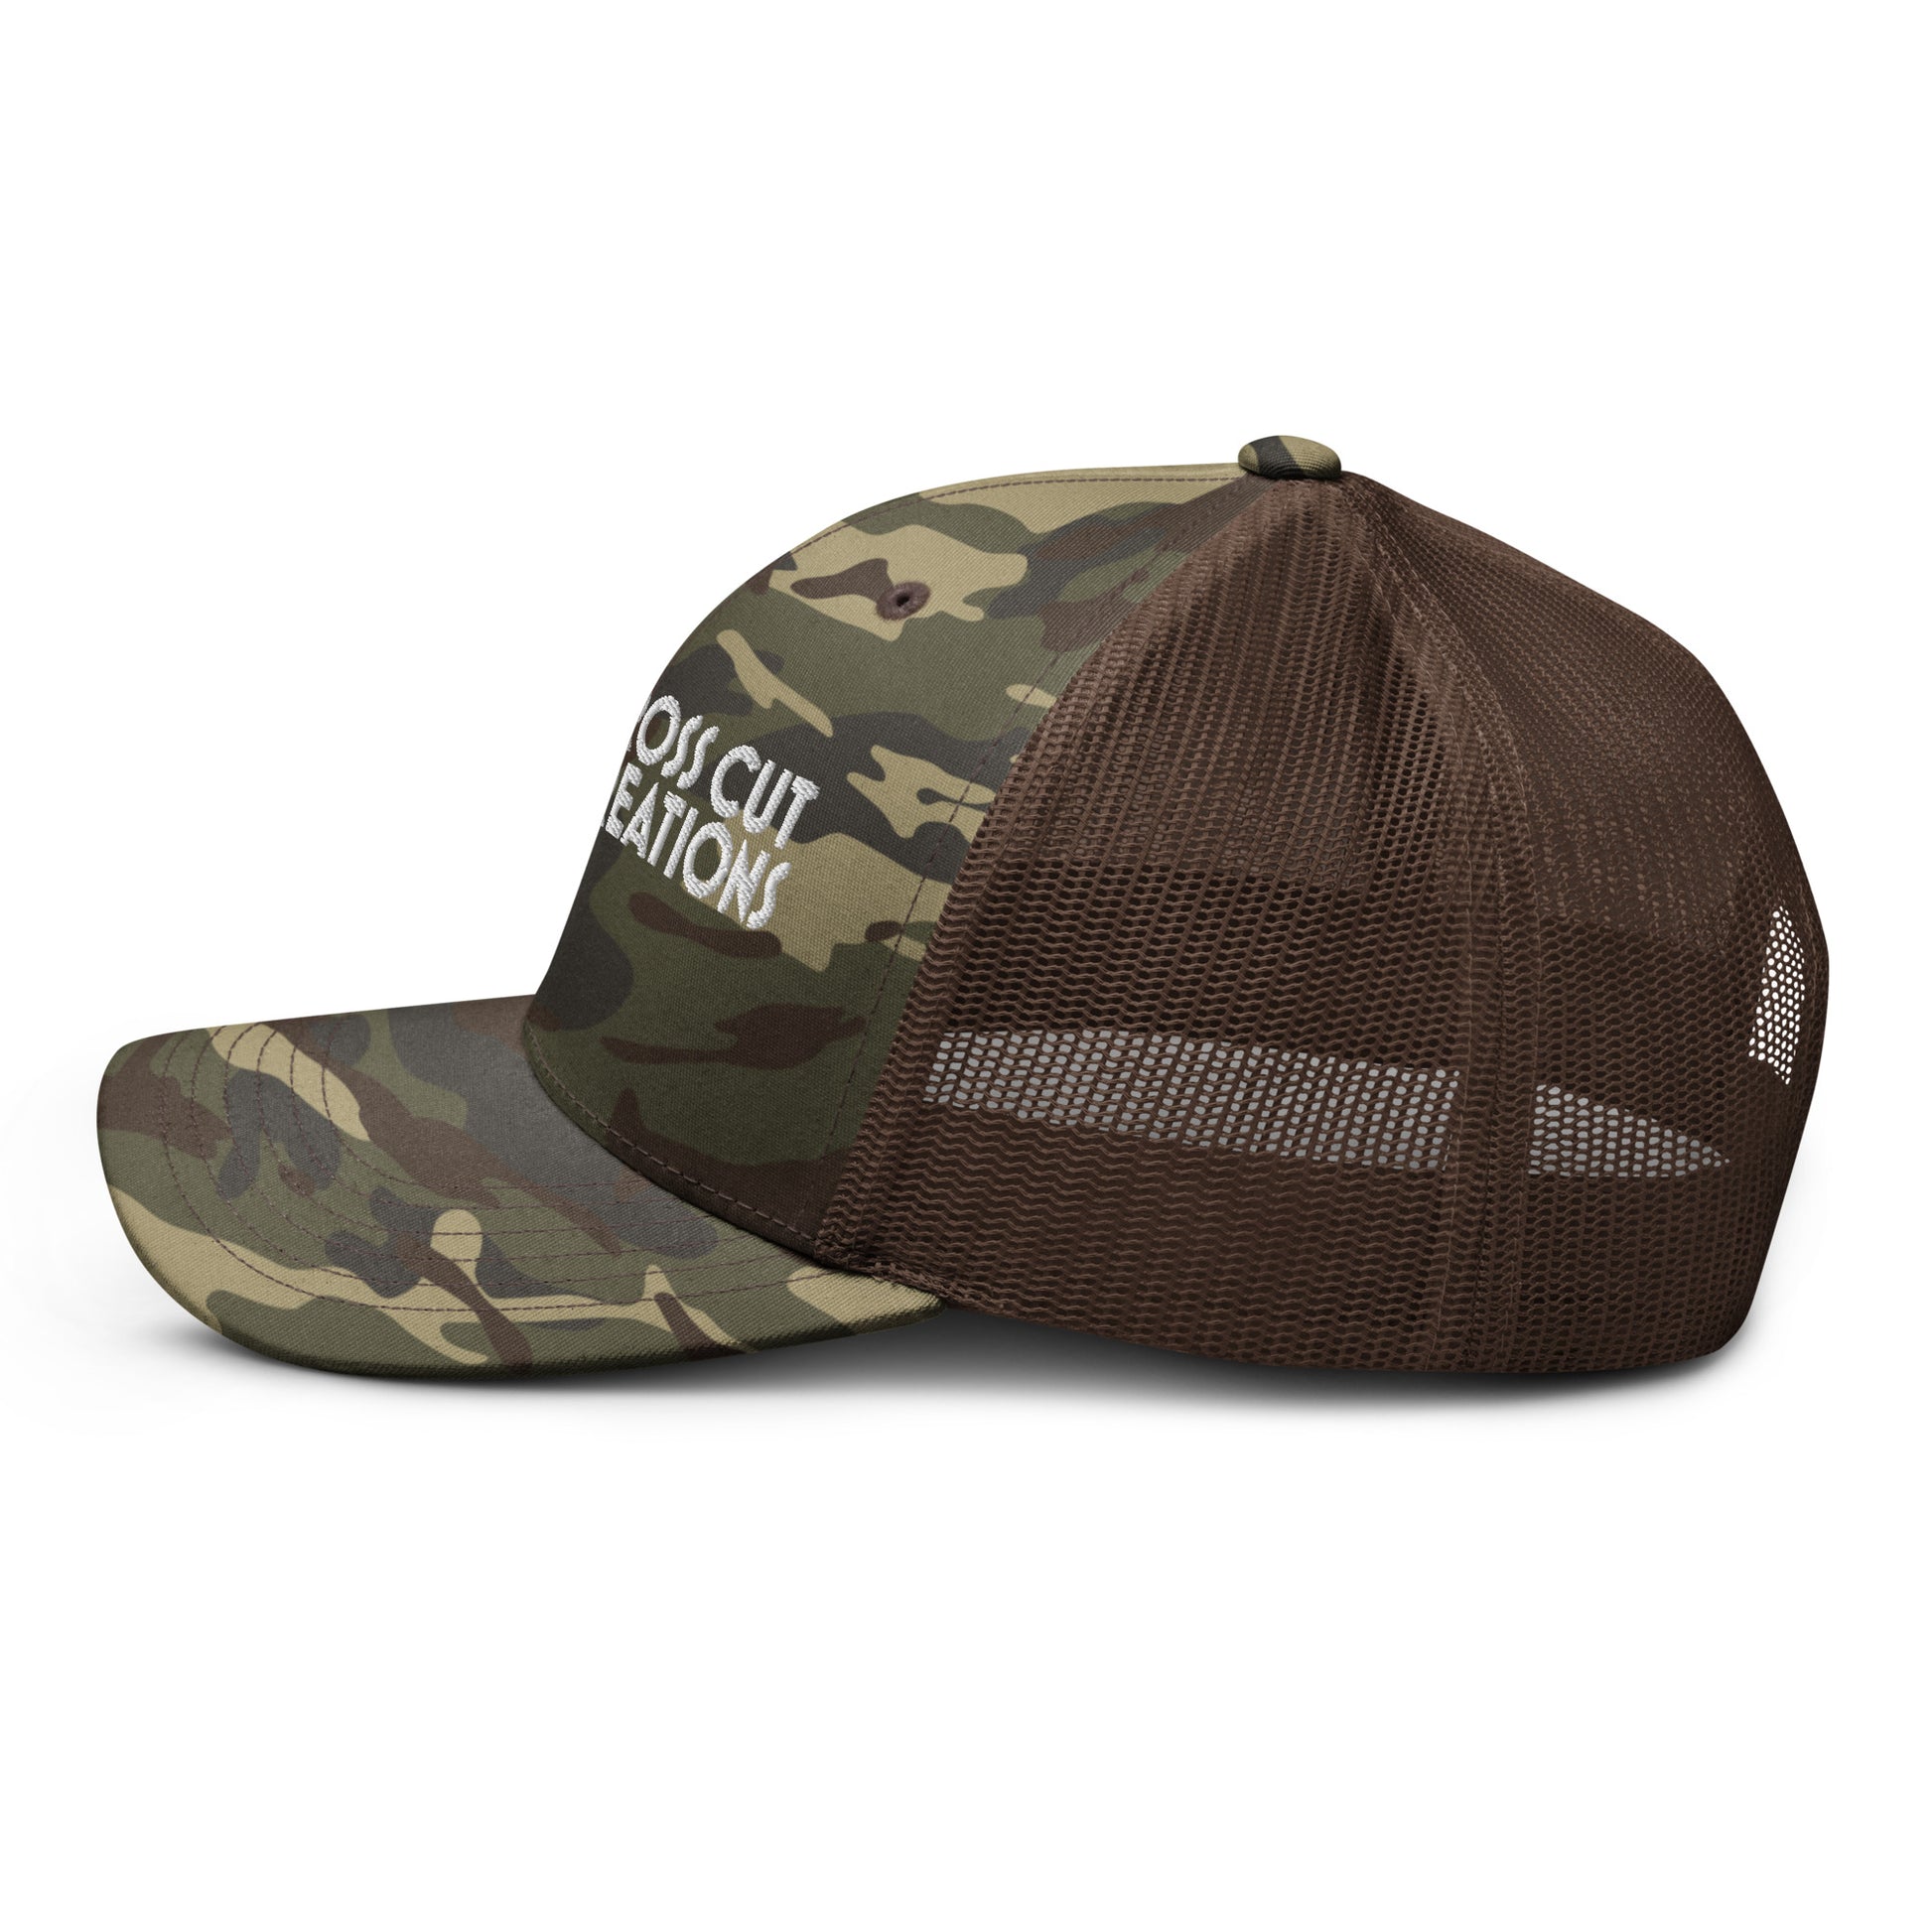 Camouflage trucker hat - Cross Cut Creations